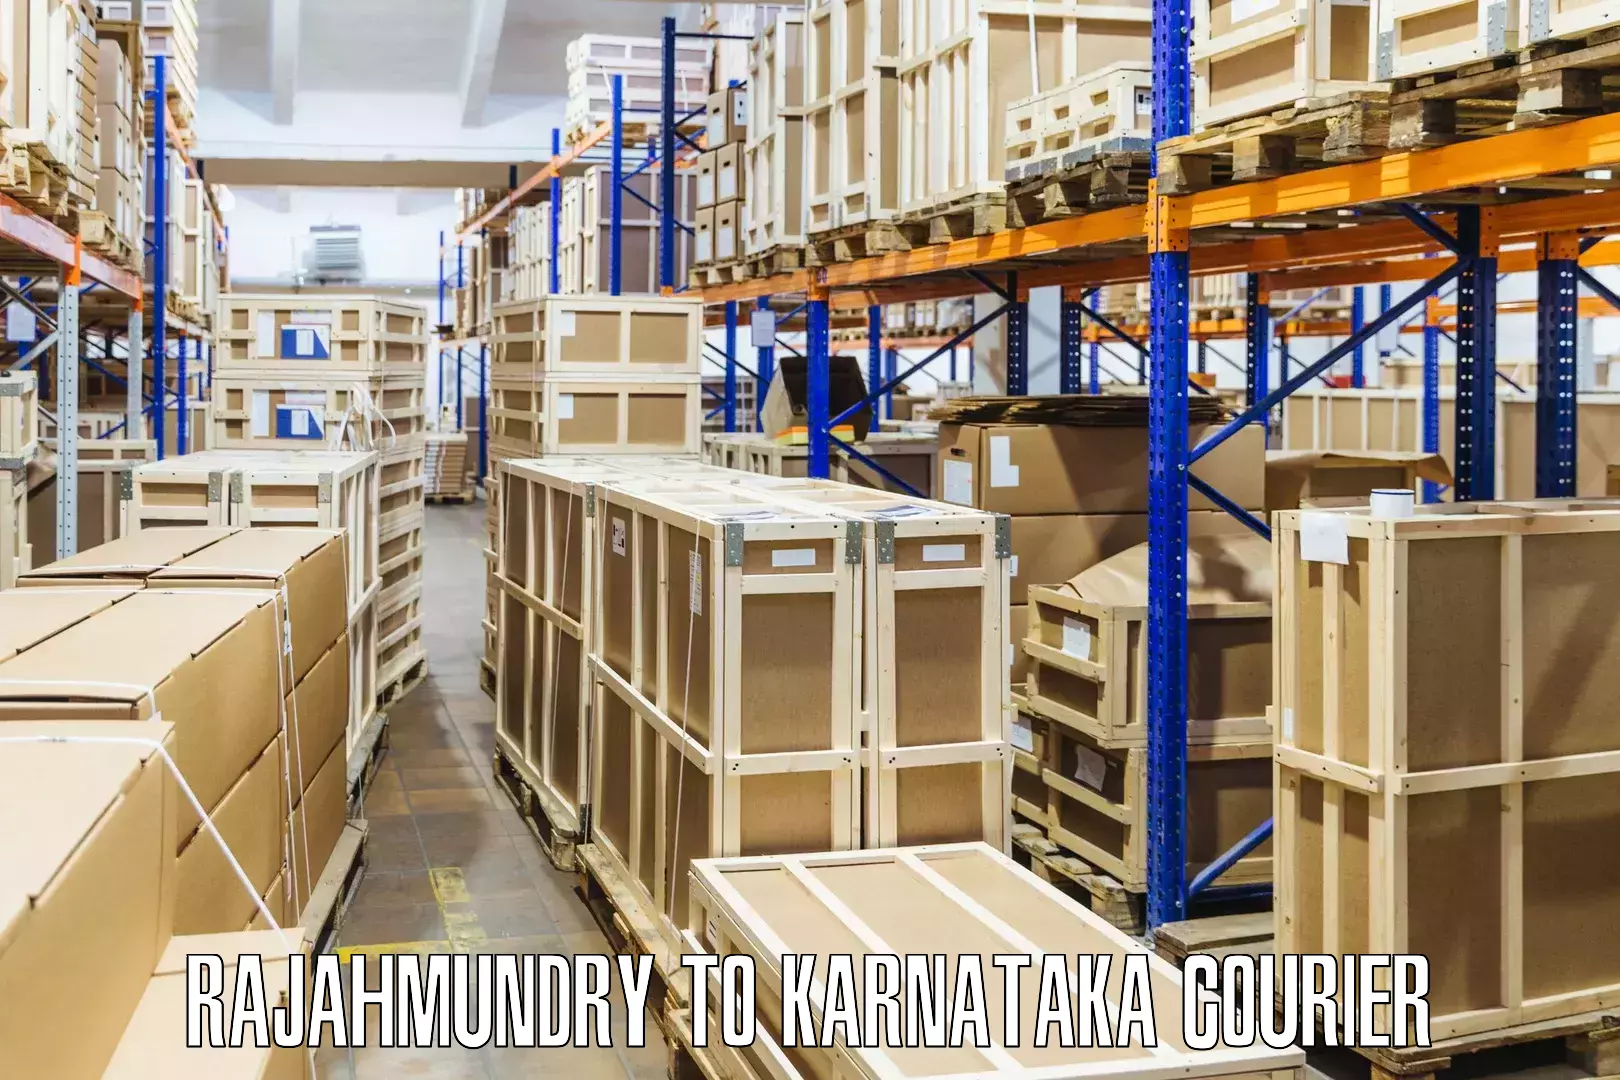 Nationwide parcel services Rajahmundry to Karnataka